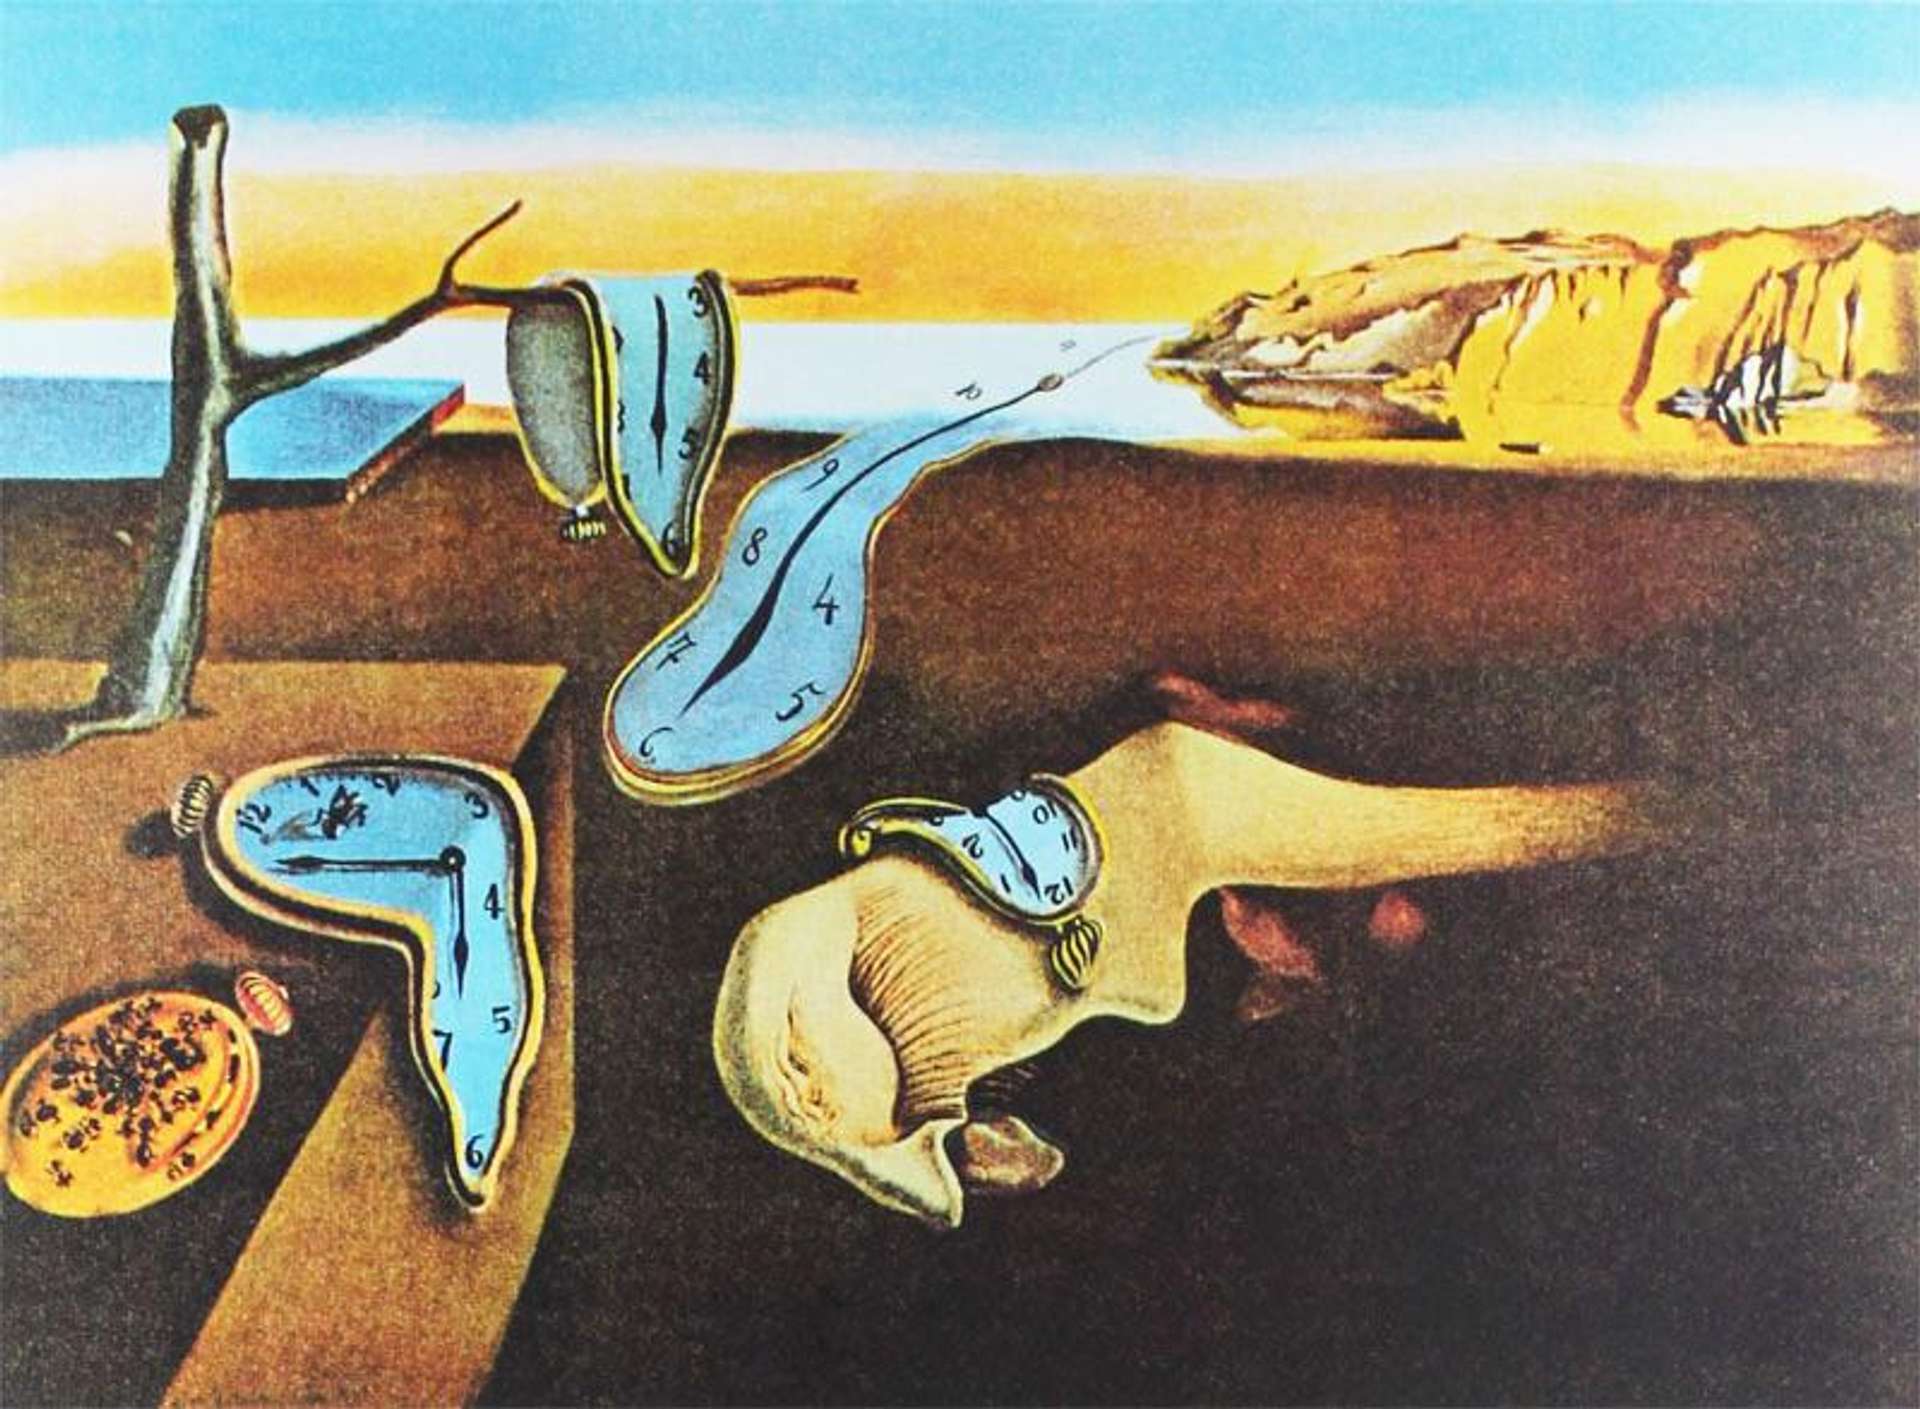 Surreal Salvador Dali Prints - Printed Editions